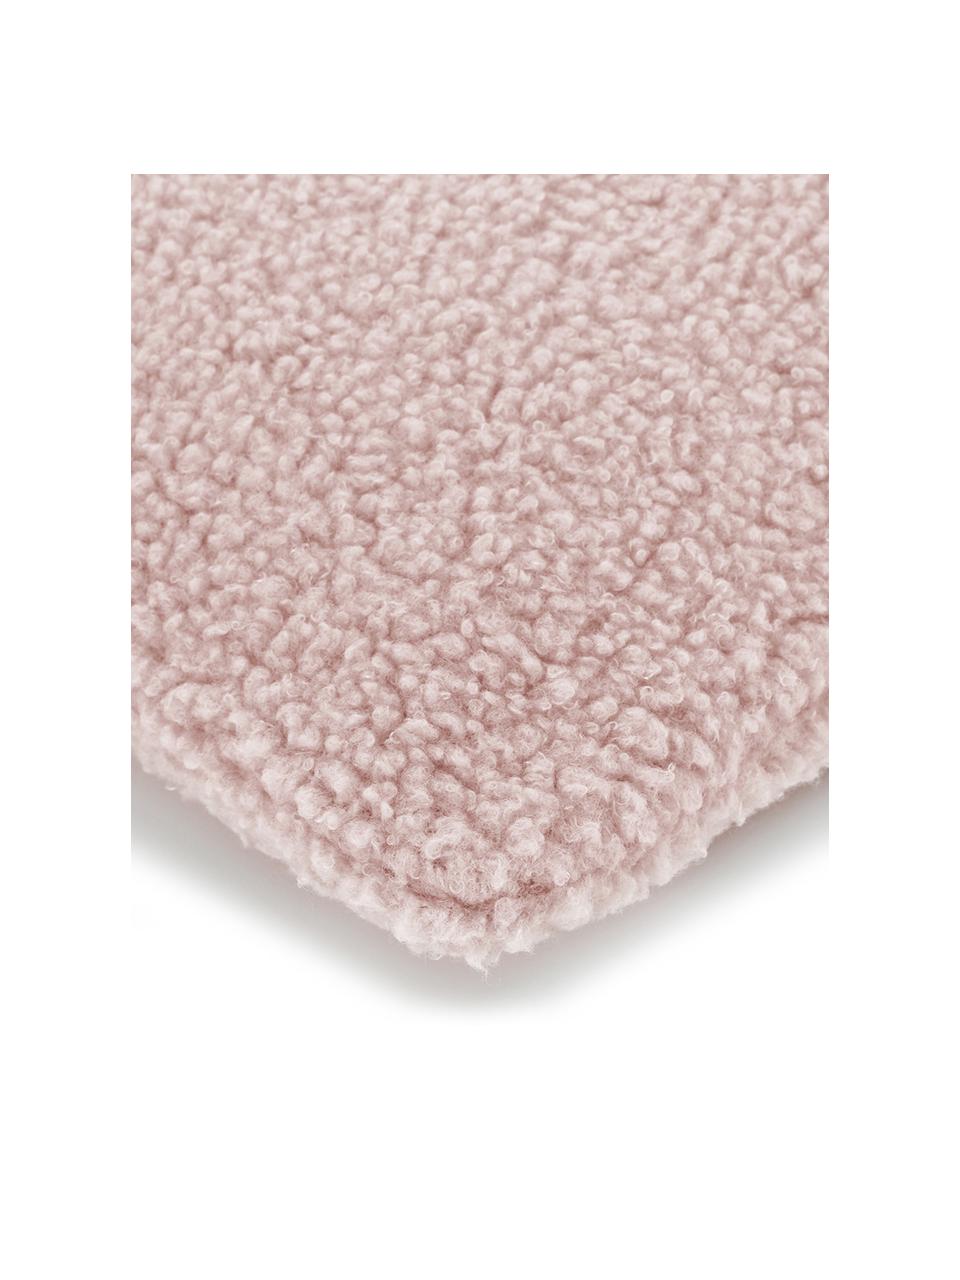 Federa arredo in teddy rosa Mille, Retro: 100% poliestere (teddy), Rosa, Larg. 45 x Lung. 45 cm